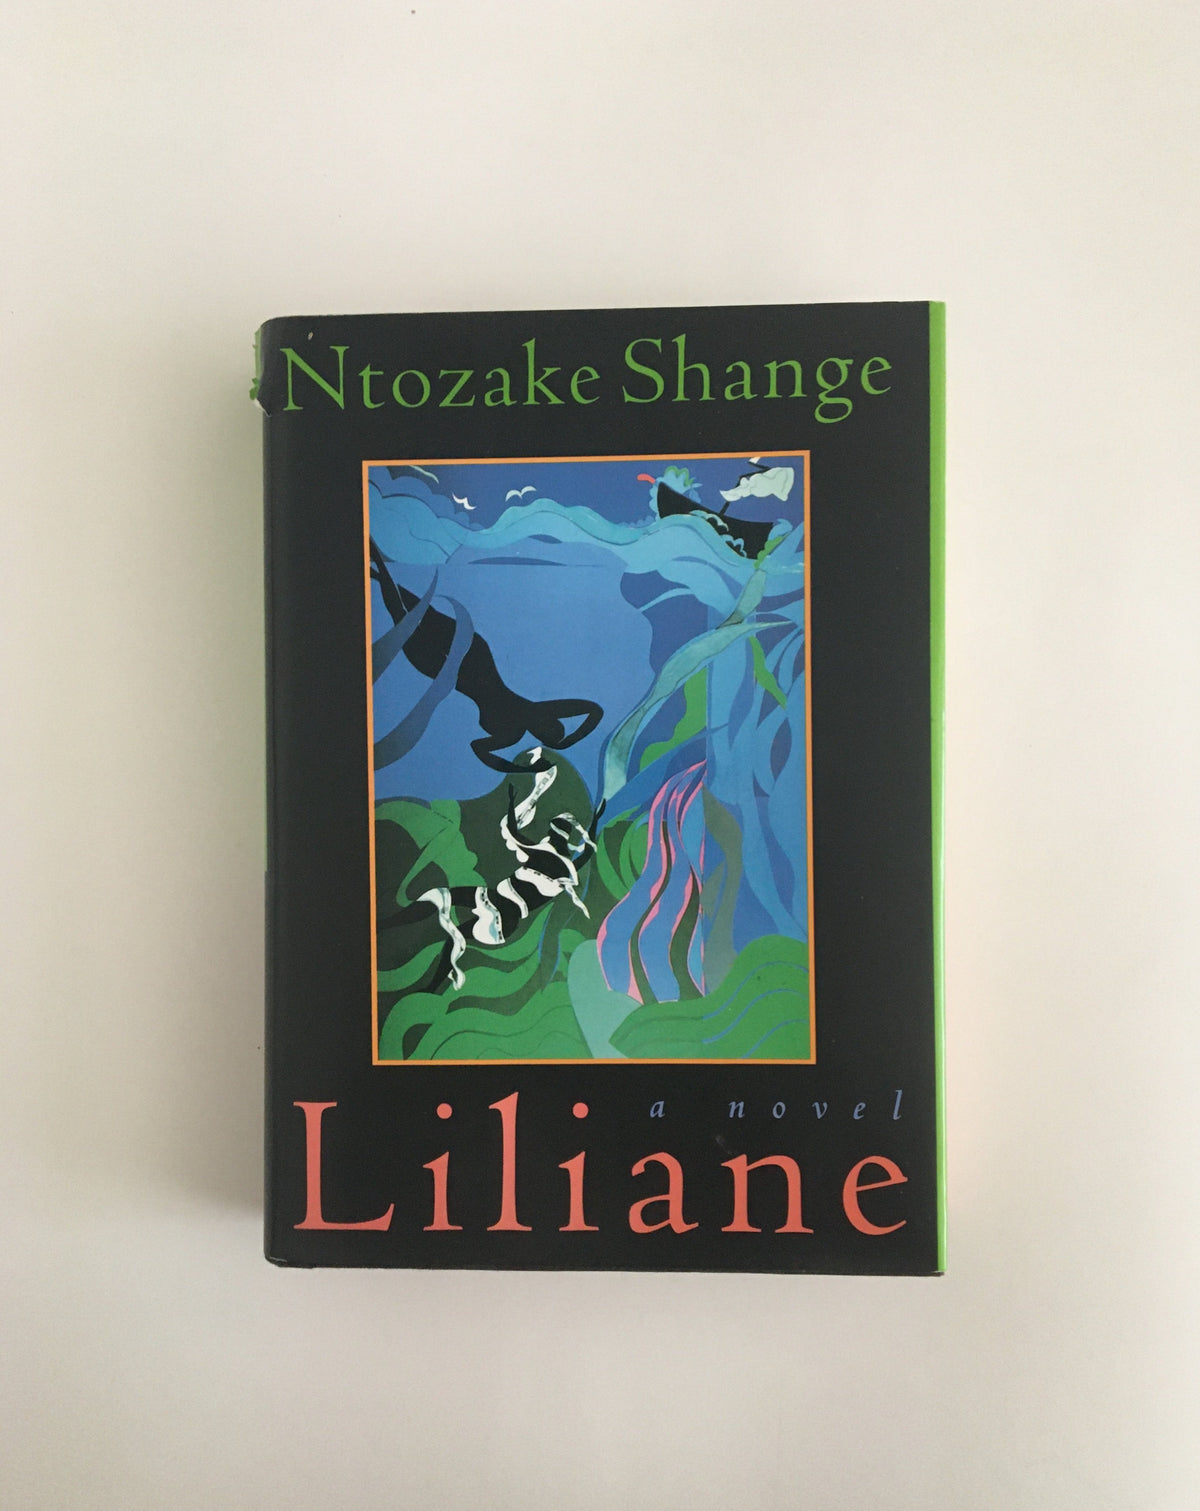 Liliane by Ntozake Shange